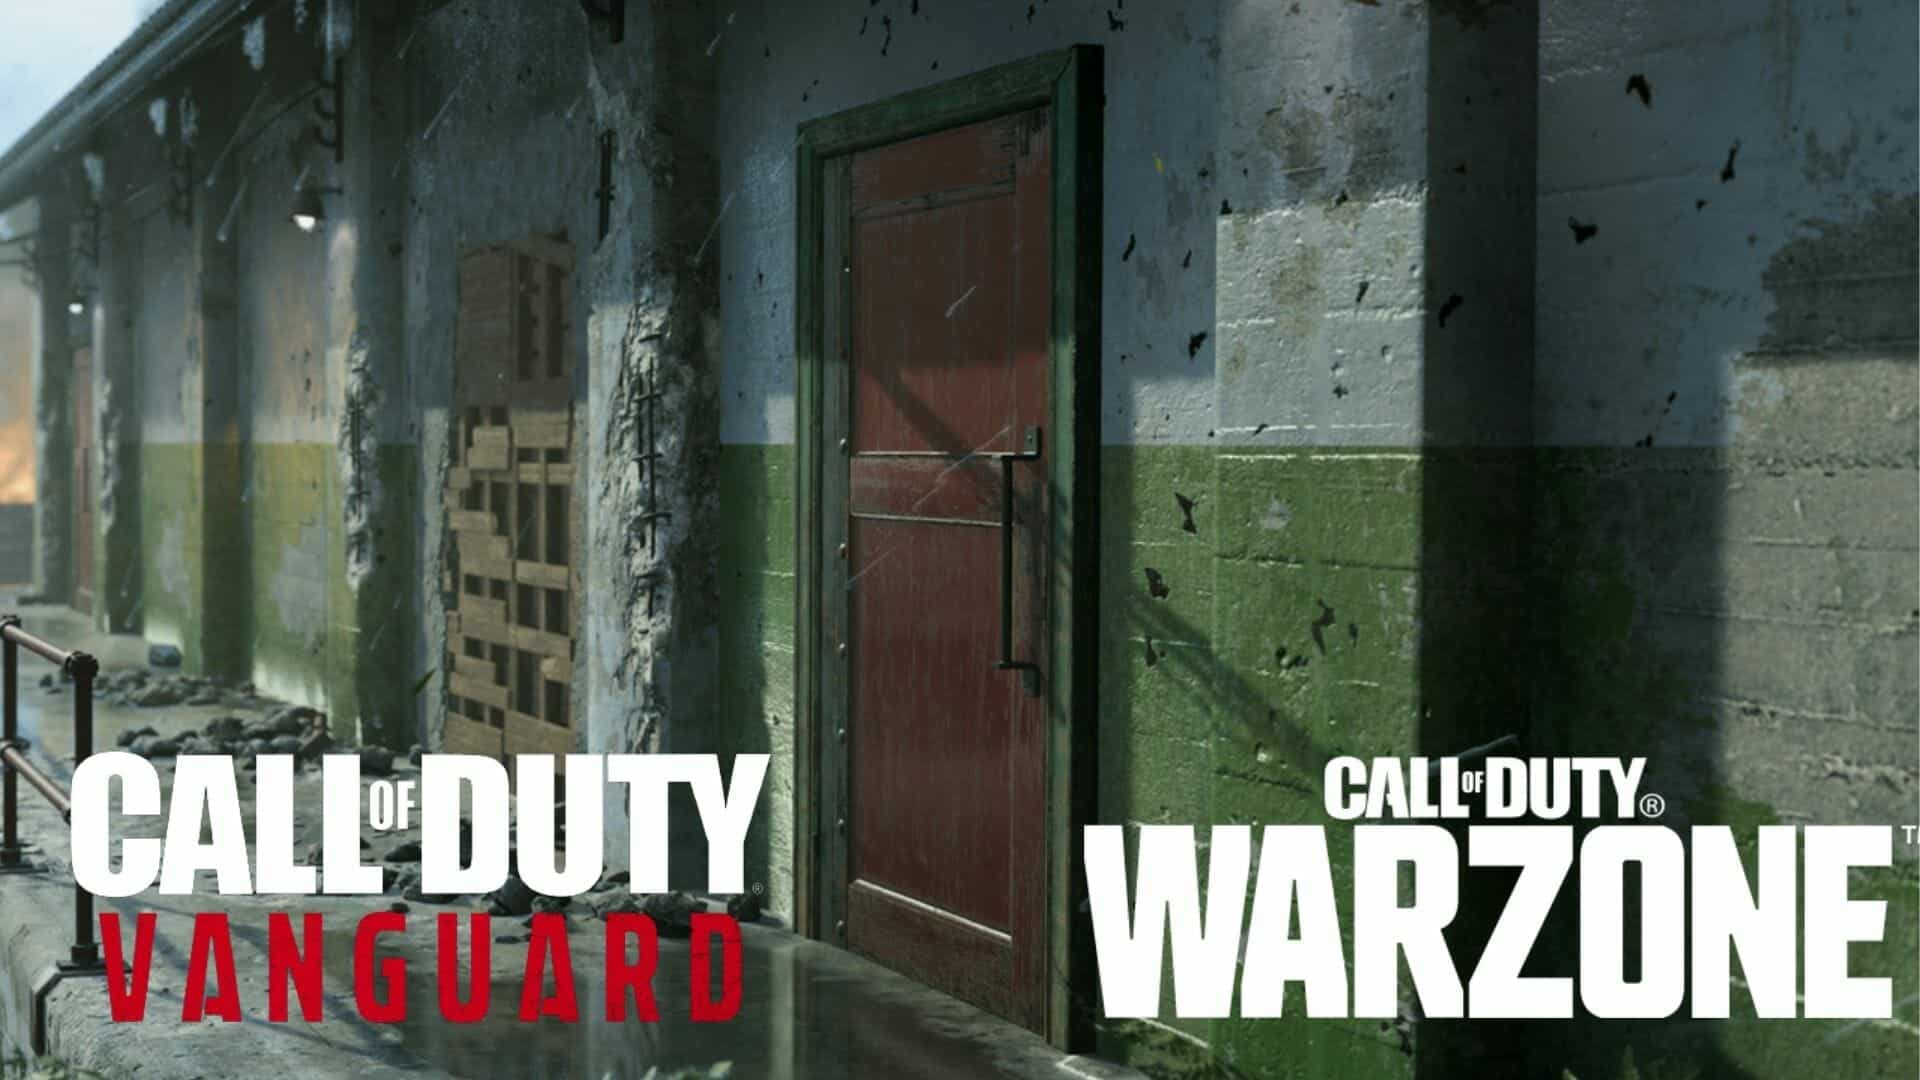 vanguard and warzone logos next to a door